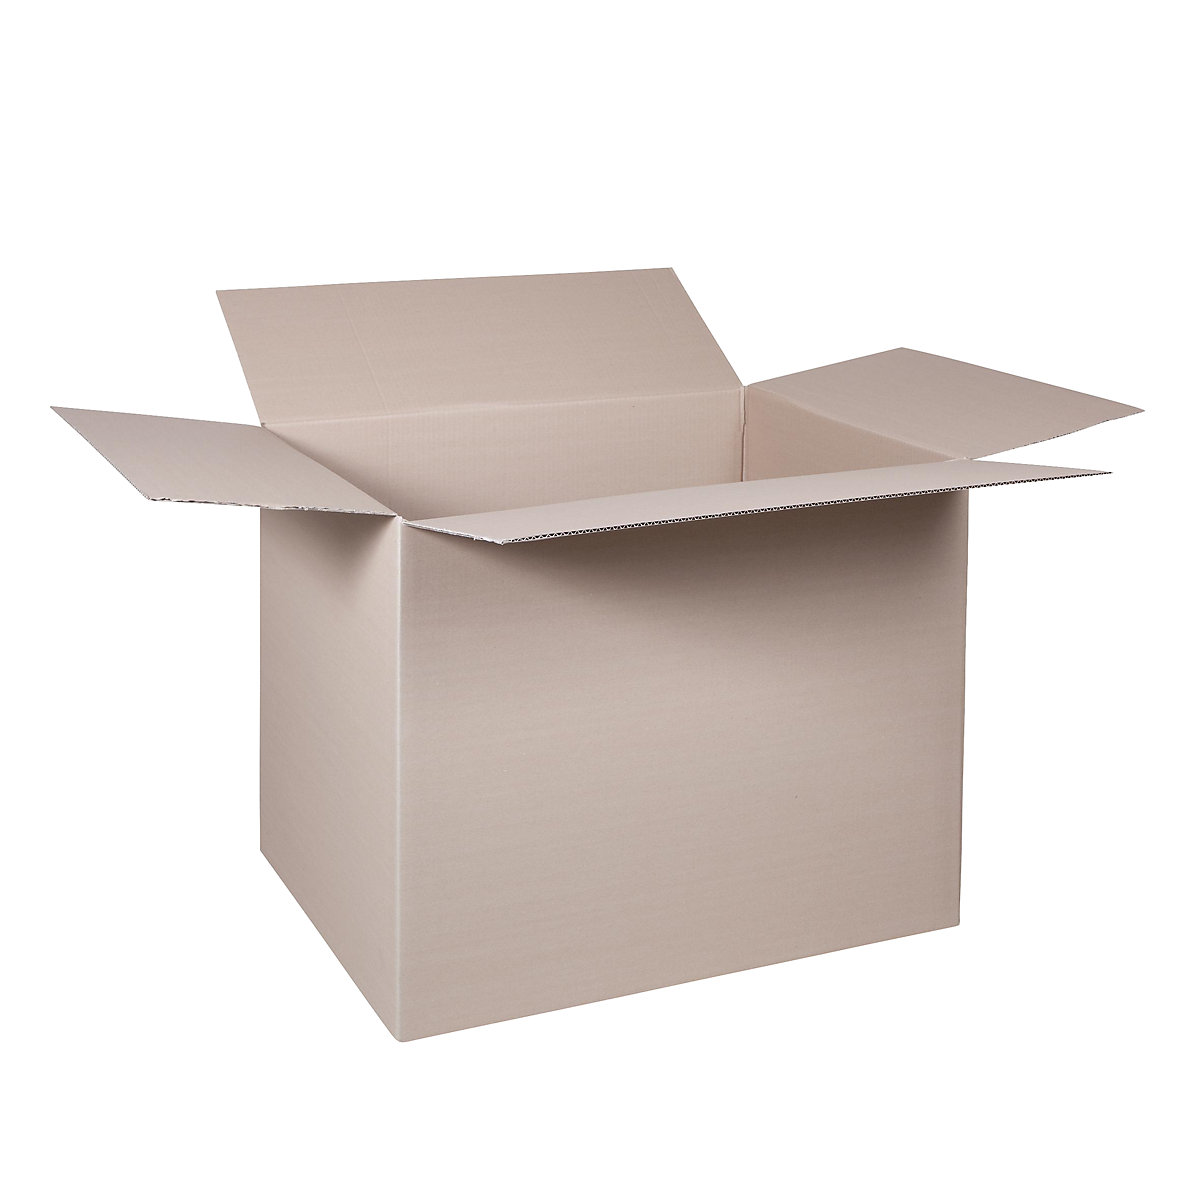 Folding cardboard box, FEFCO 0201, made of single fluted cardboard, internal dimensions 780 x 580 x 600 mm, pack of 100-36